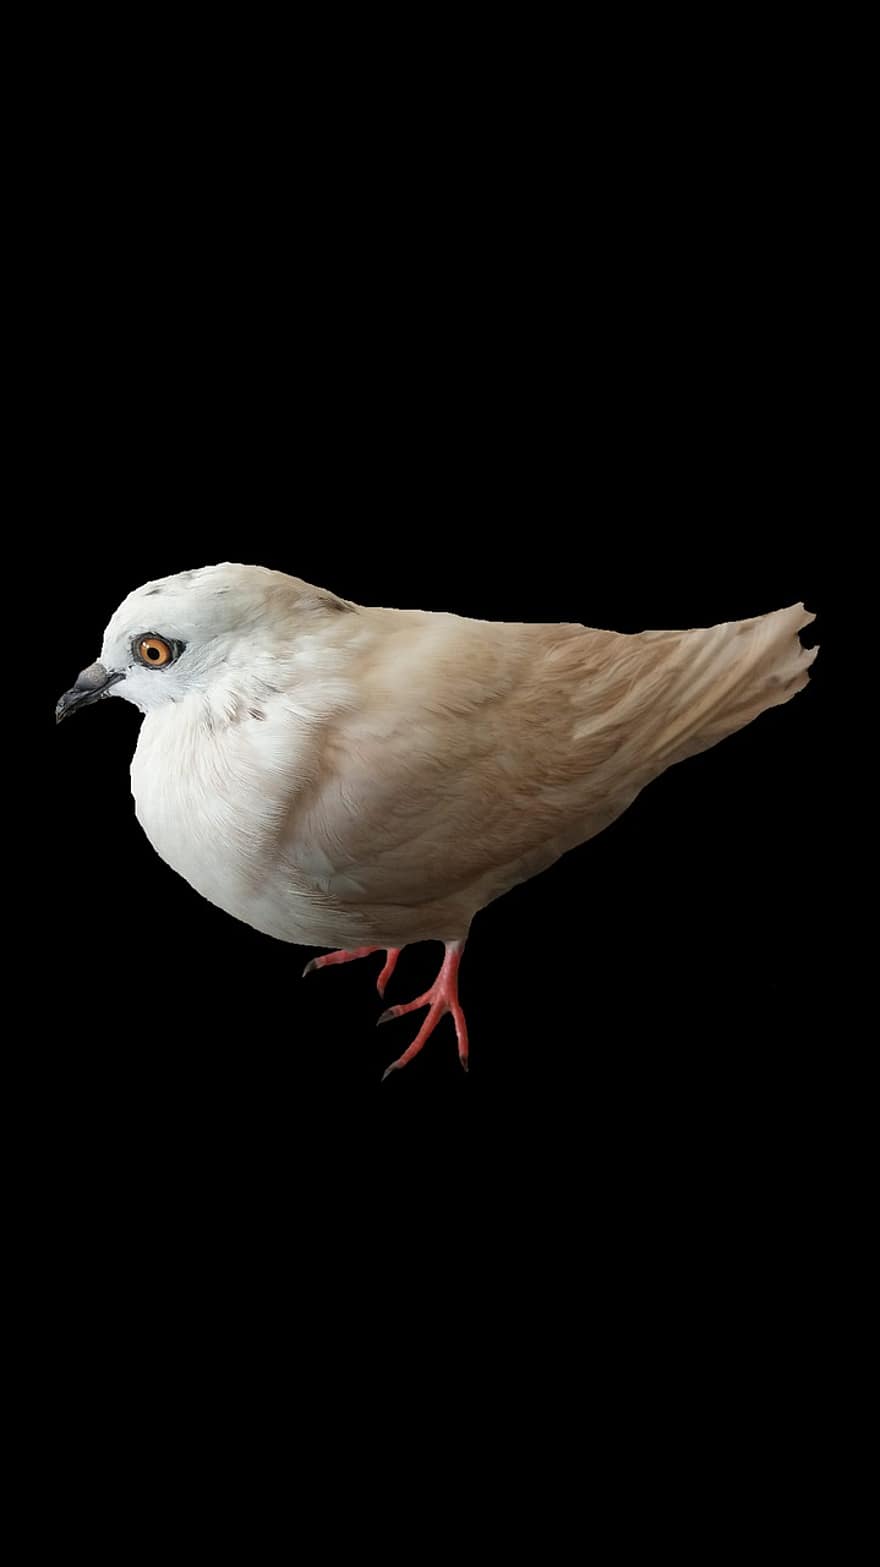 Dove, Bird, Animal, Feathers, White Bird, Plumage, Beak, Bill, Bird Watching, Ornithology, Animal World